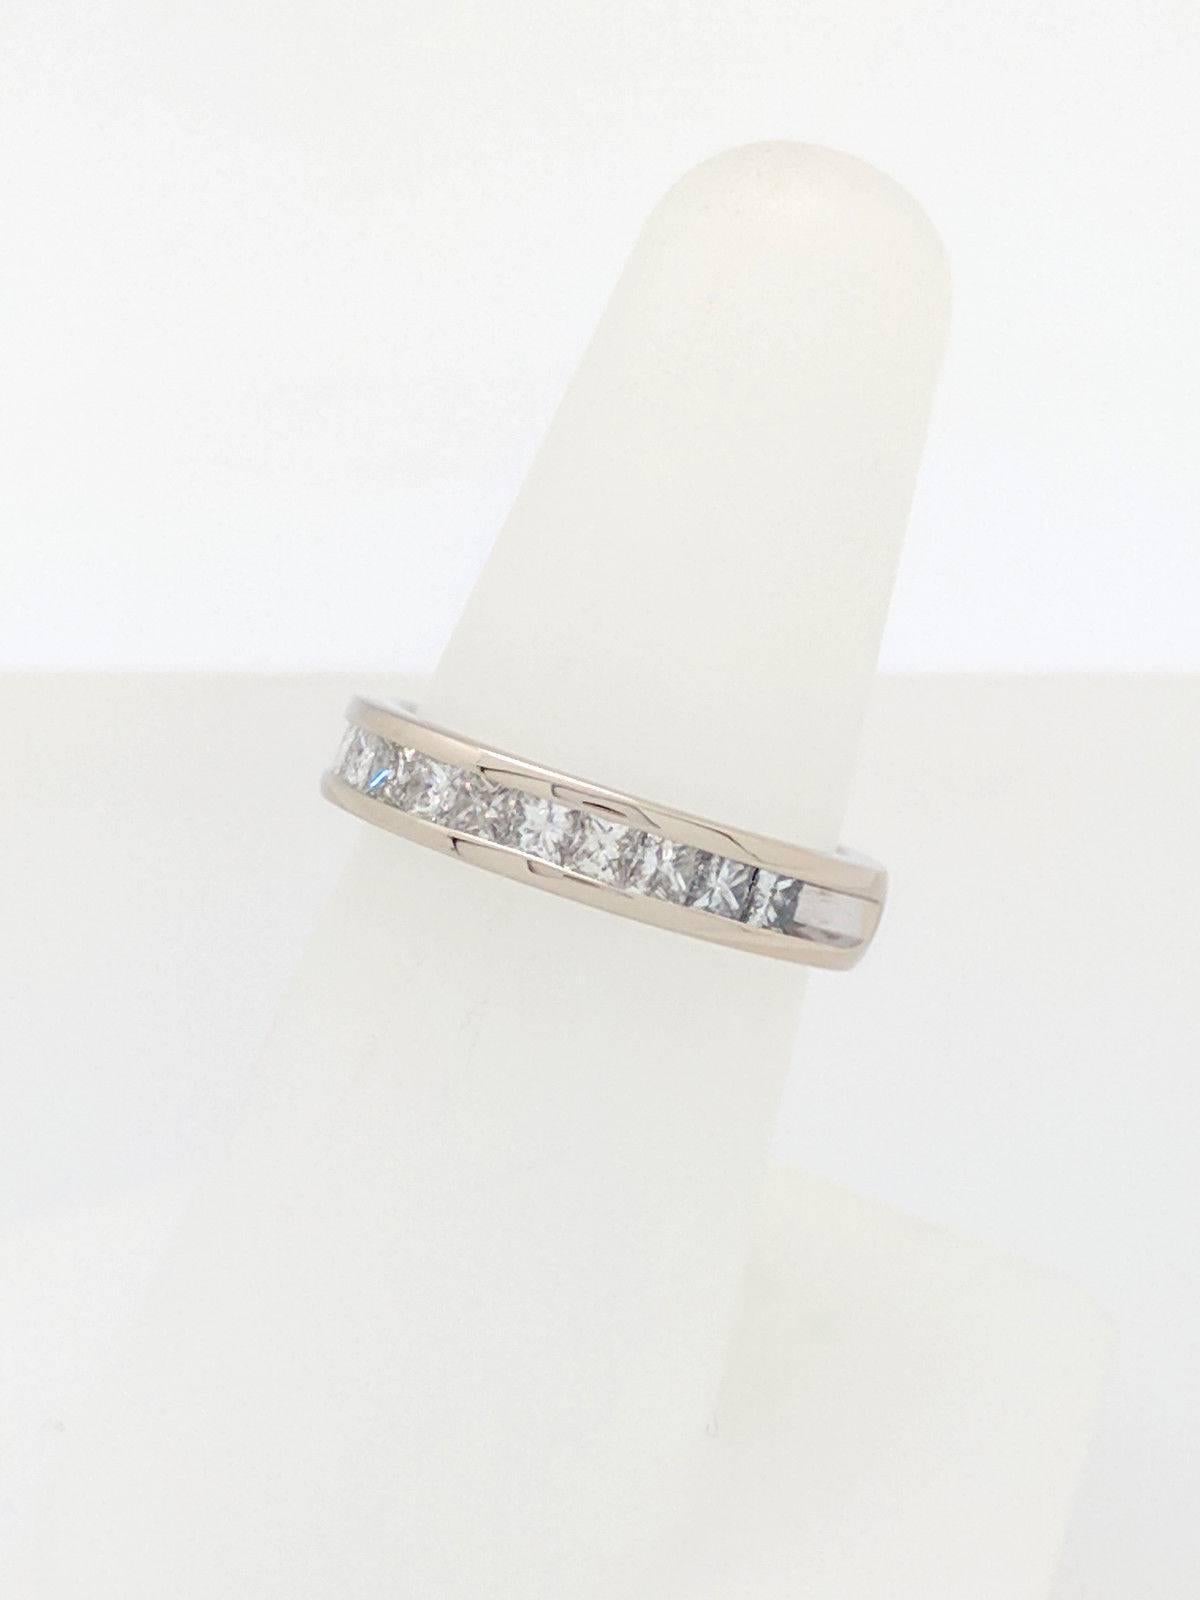 1 carat diamond wedding ring